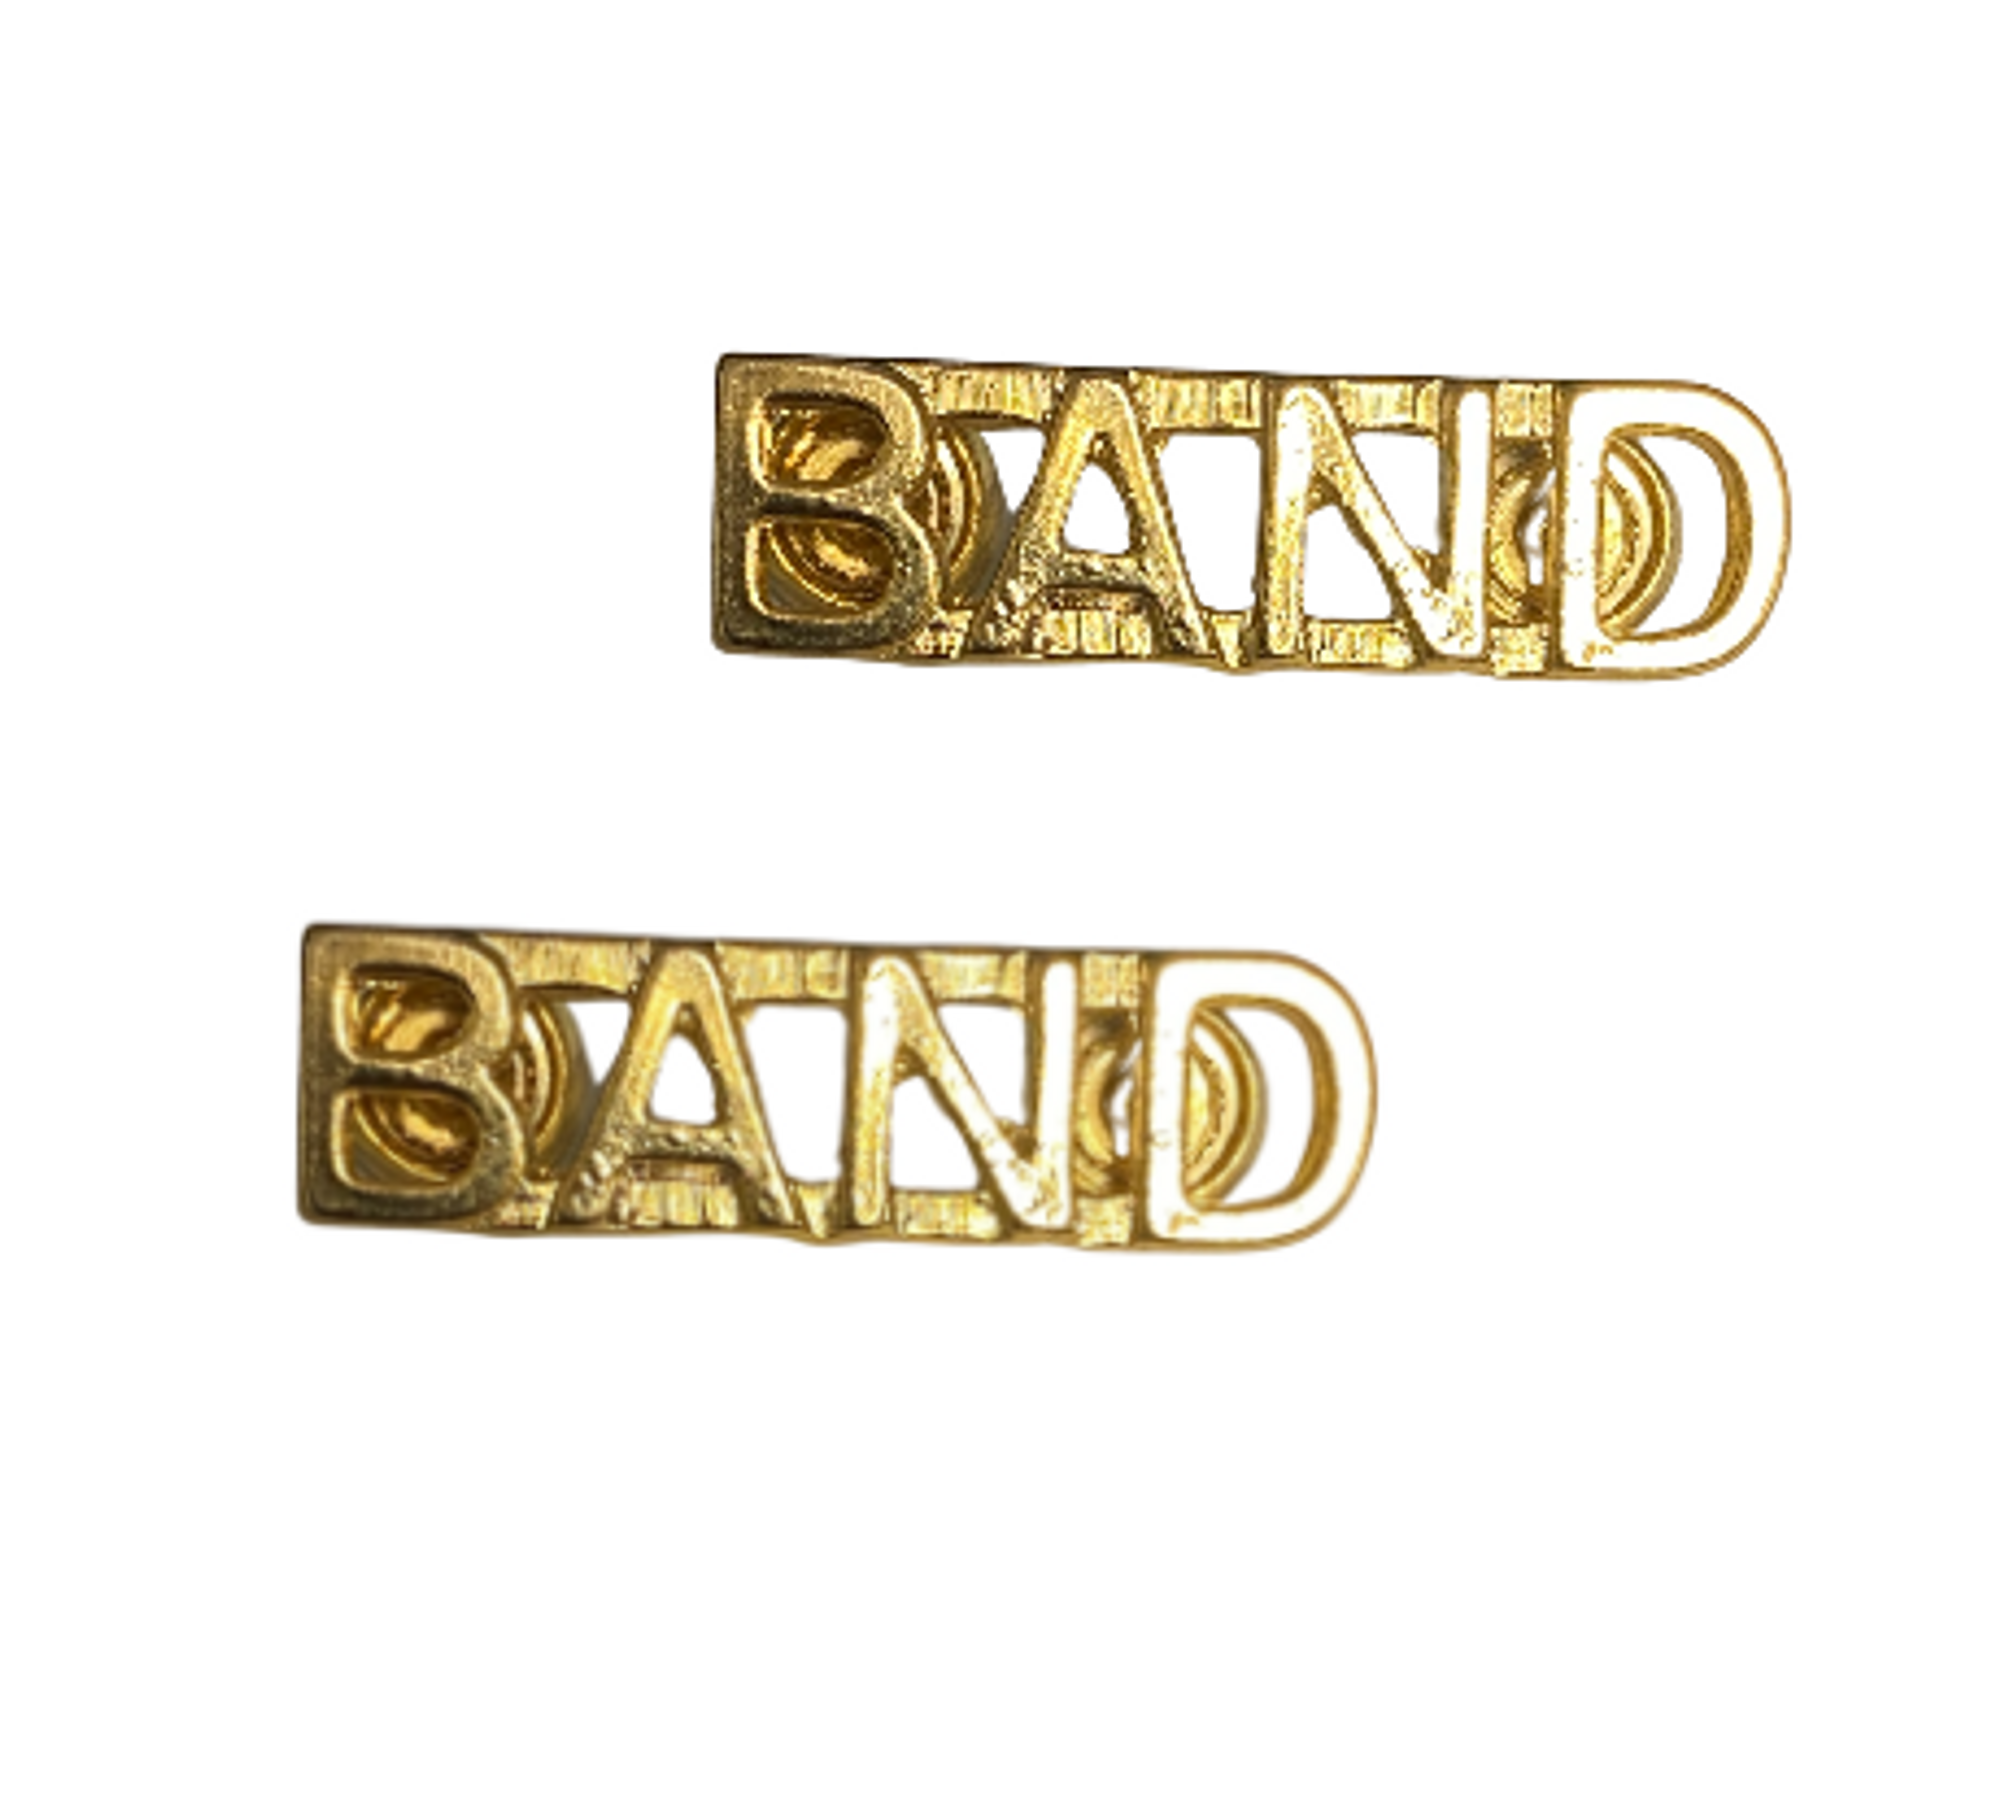 Canadian Armed Forces Band Shoulder Title Badge (Pair)